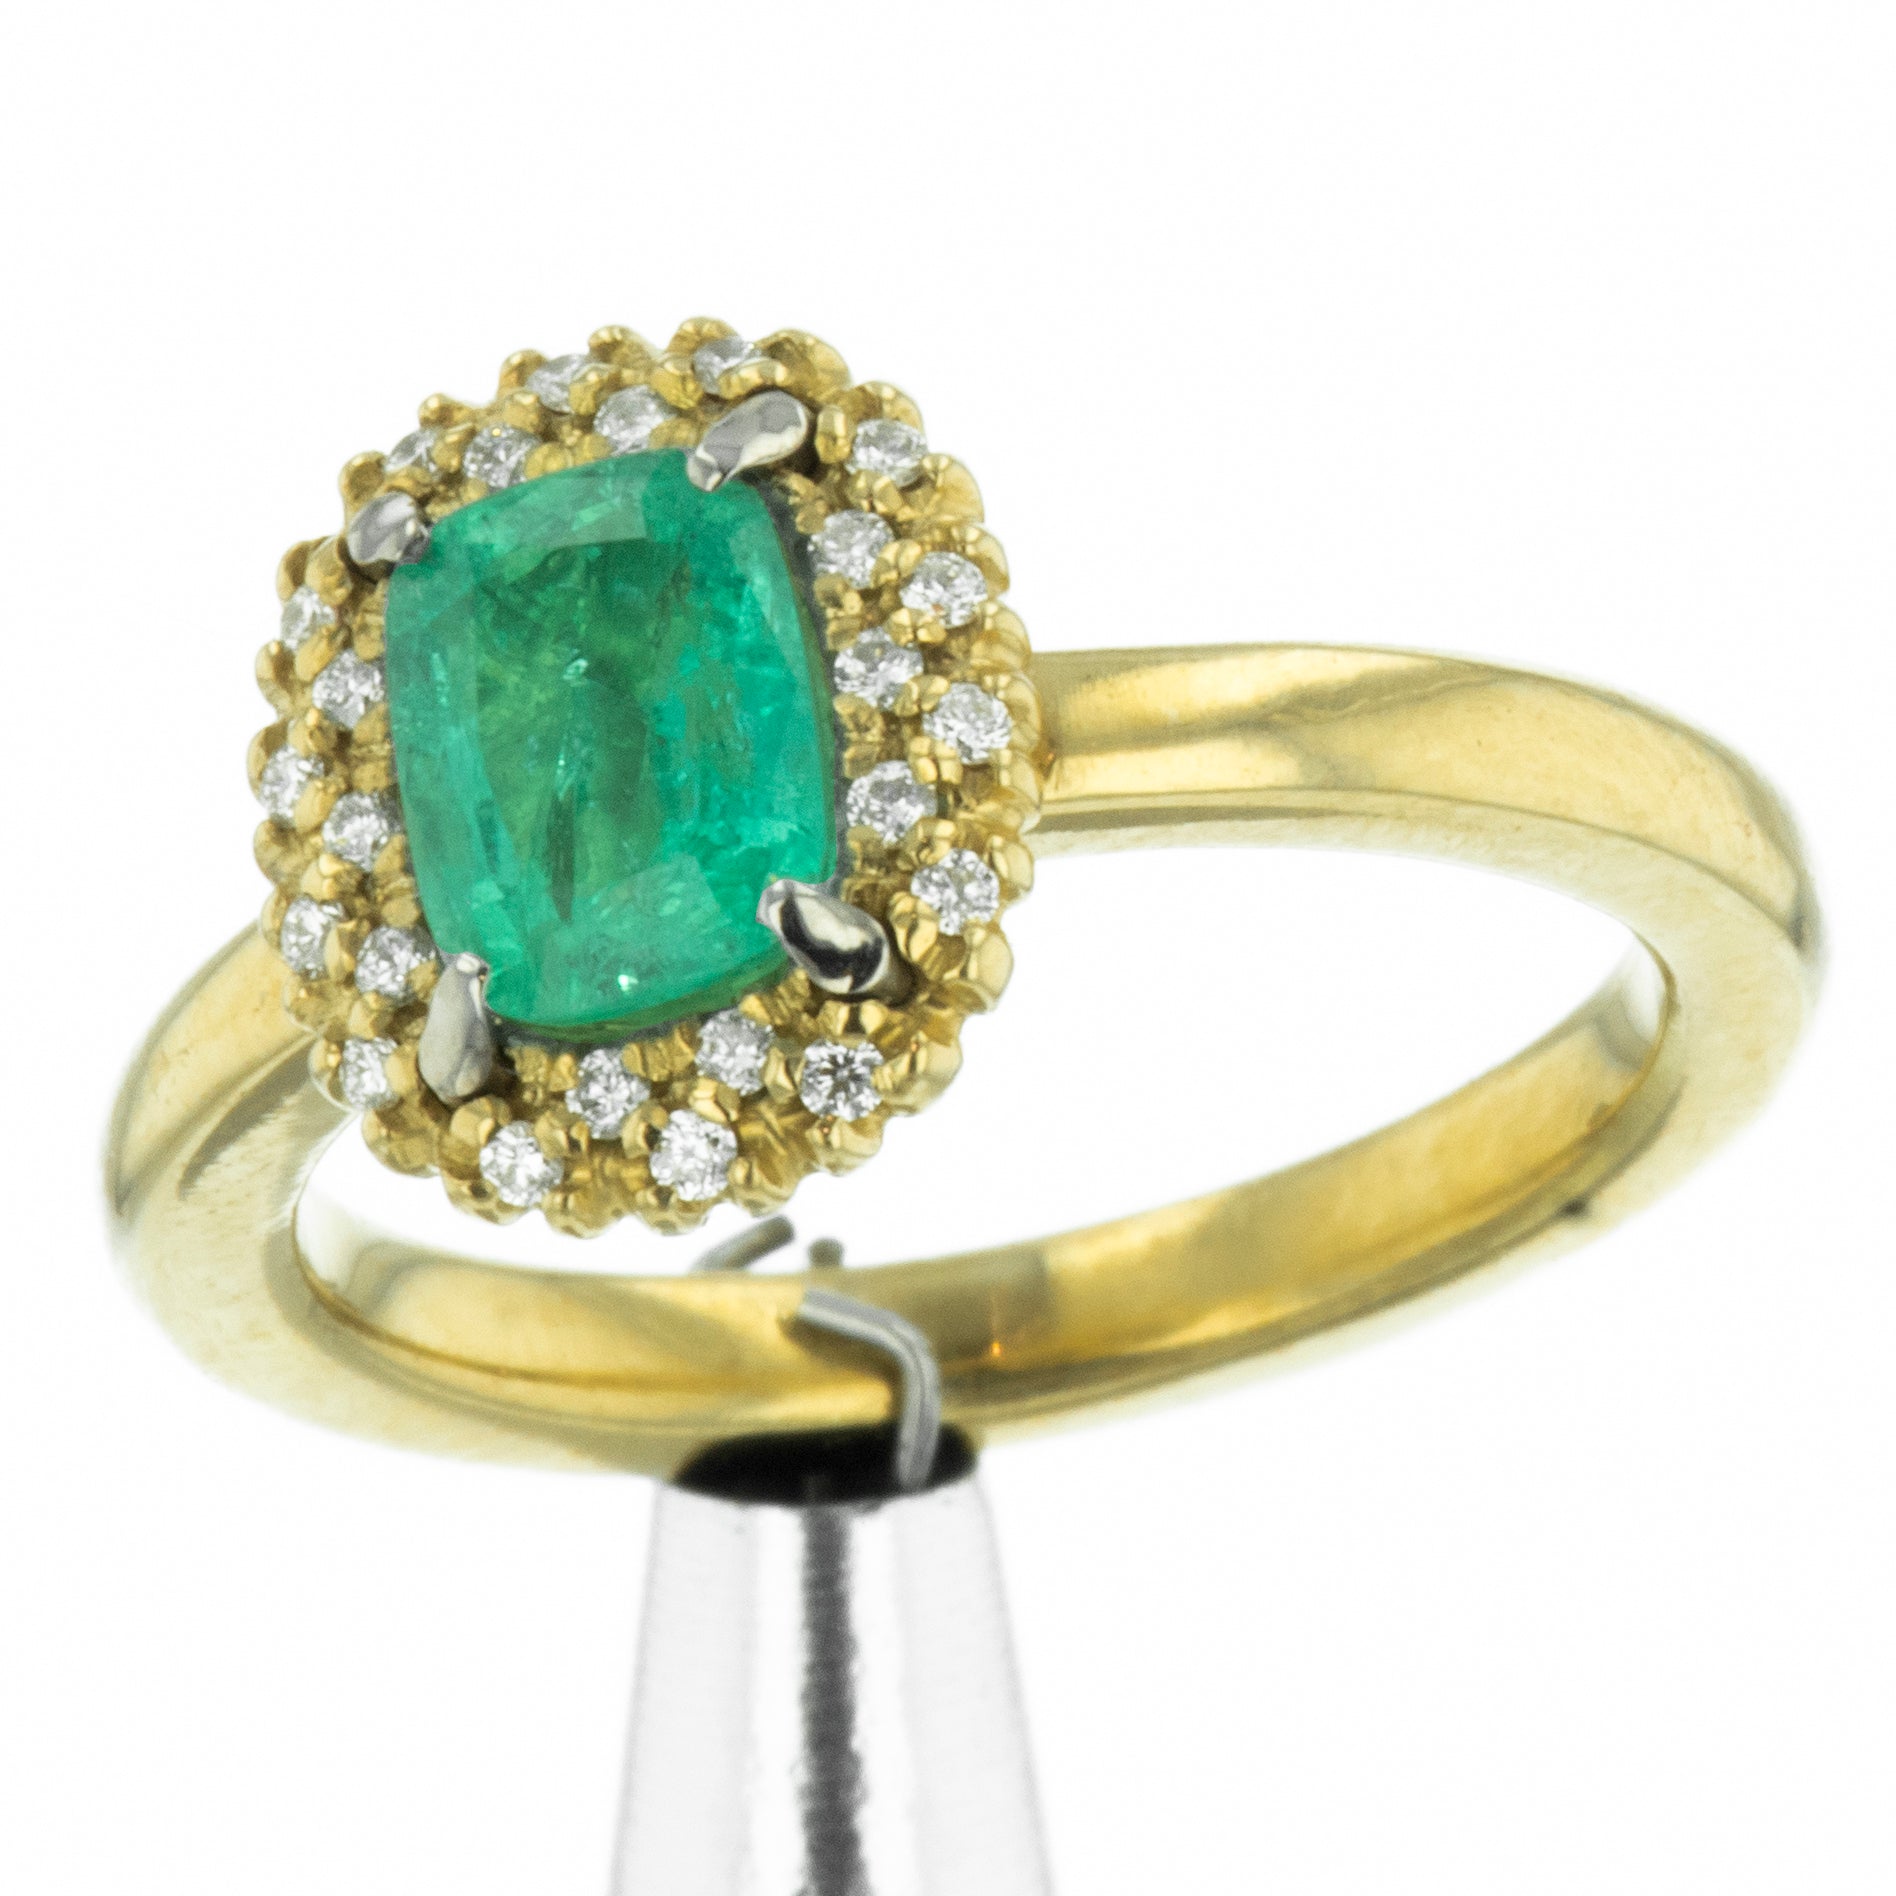 Emerald and diamond ring yellow gold